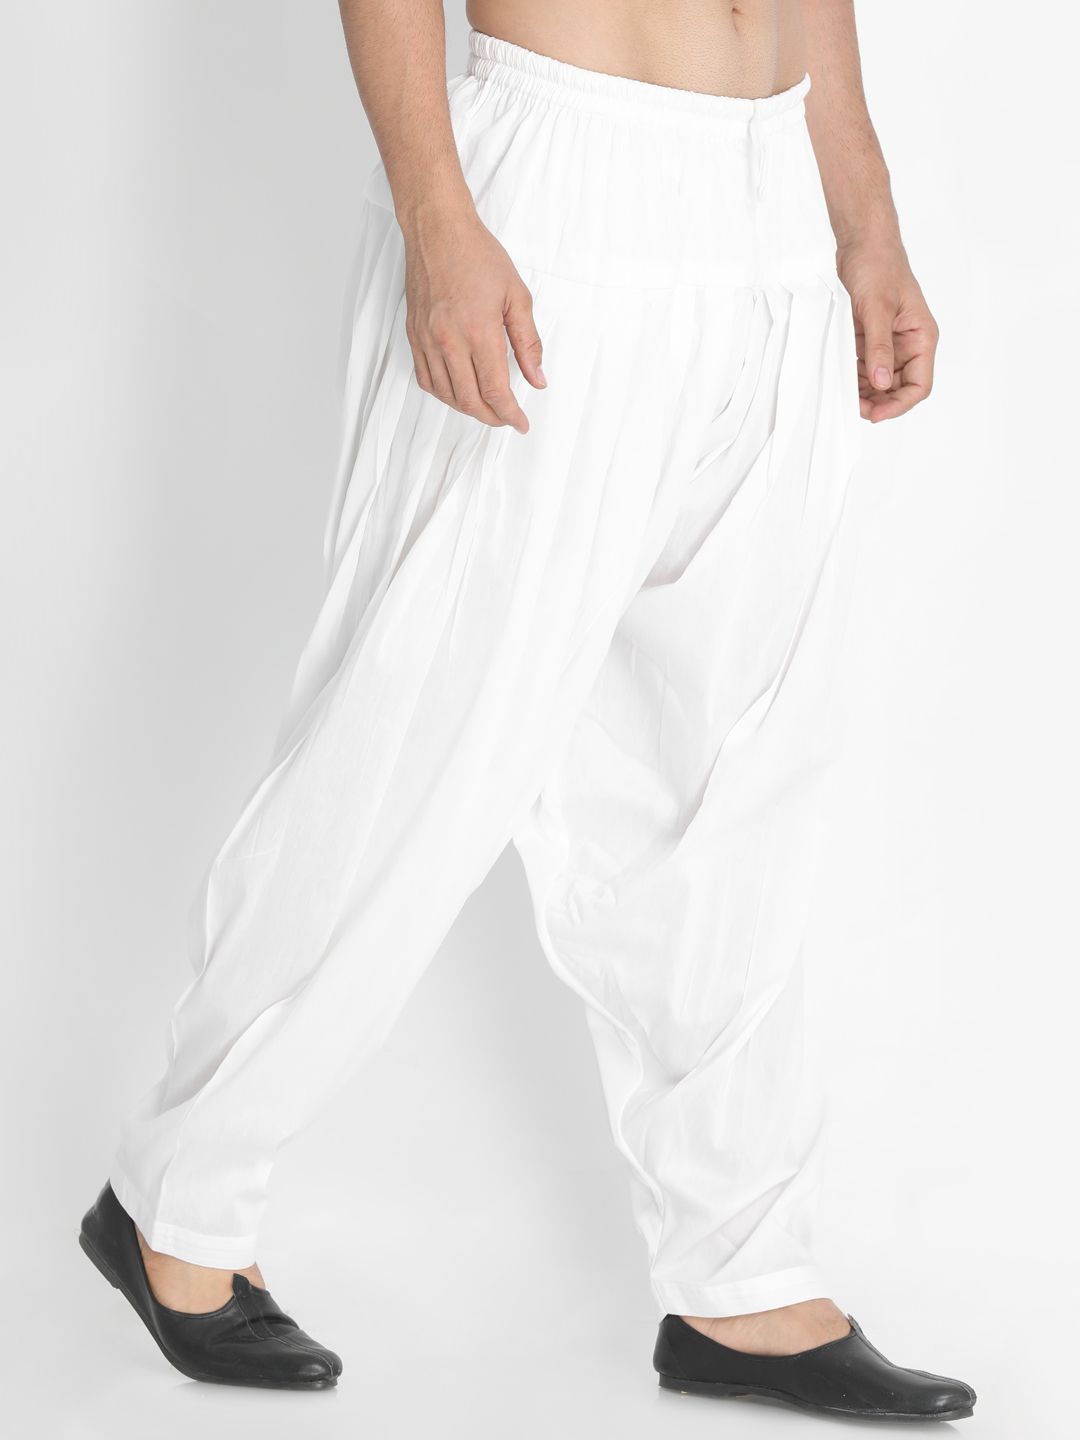 Men's White Cotton Blend Patiala Pyjama